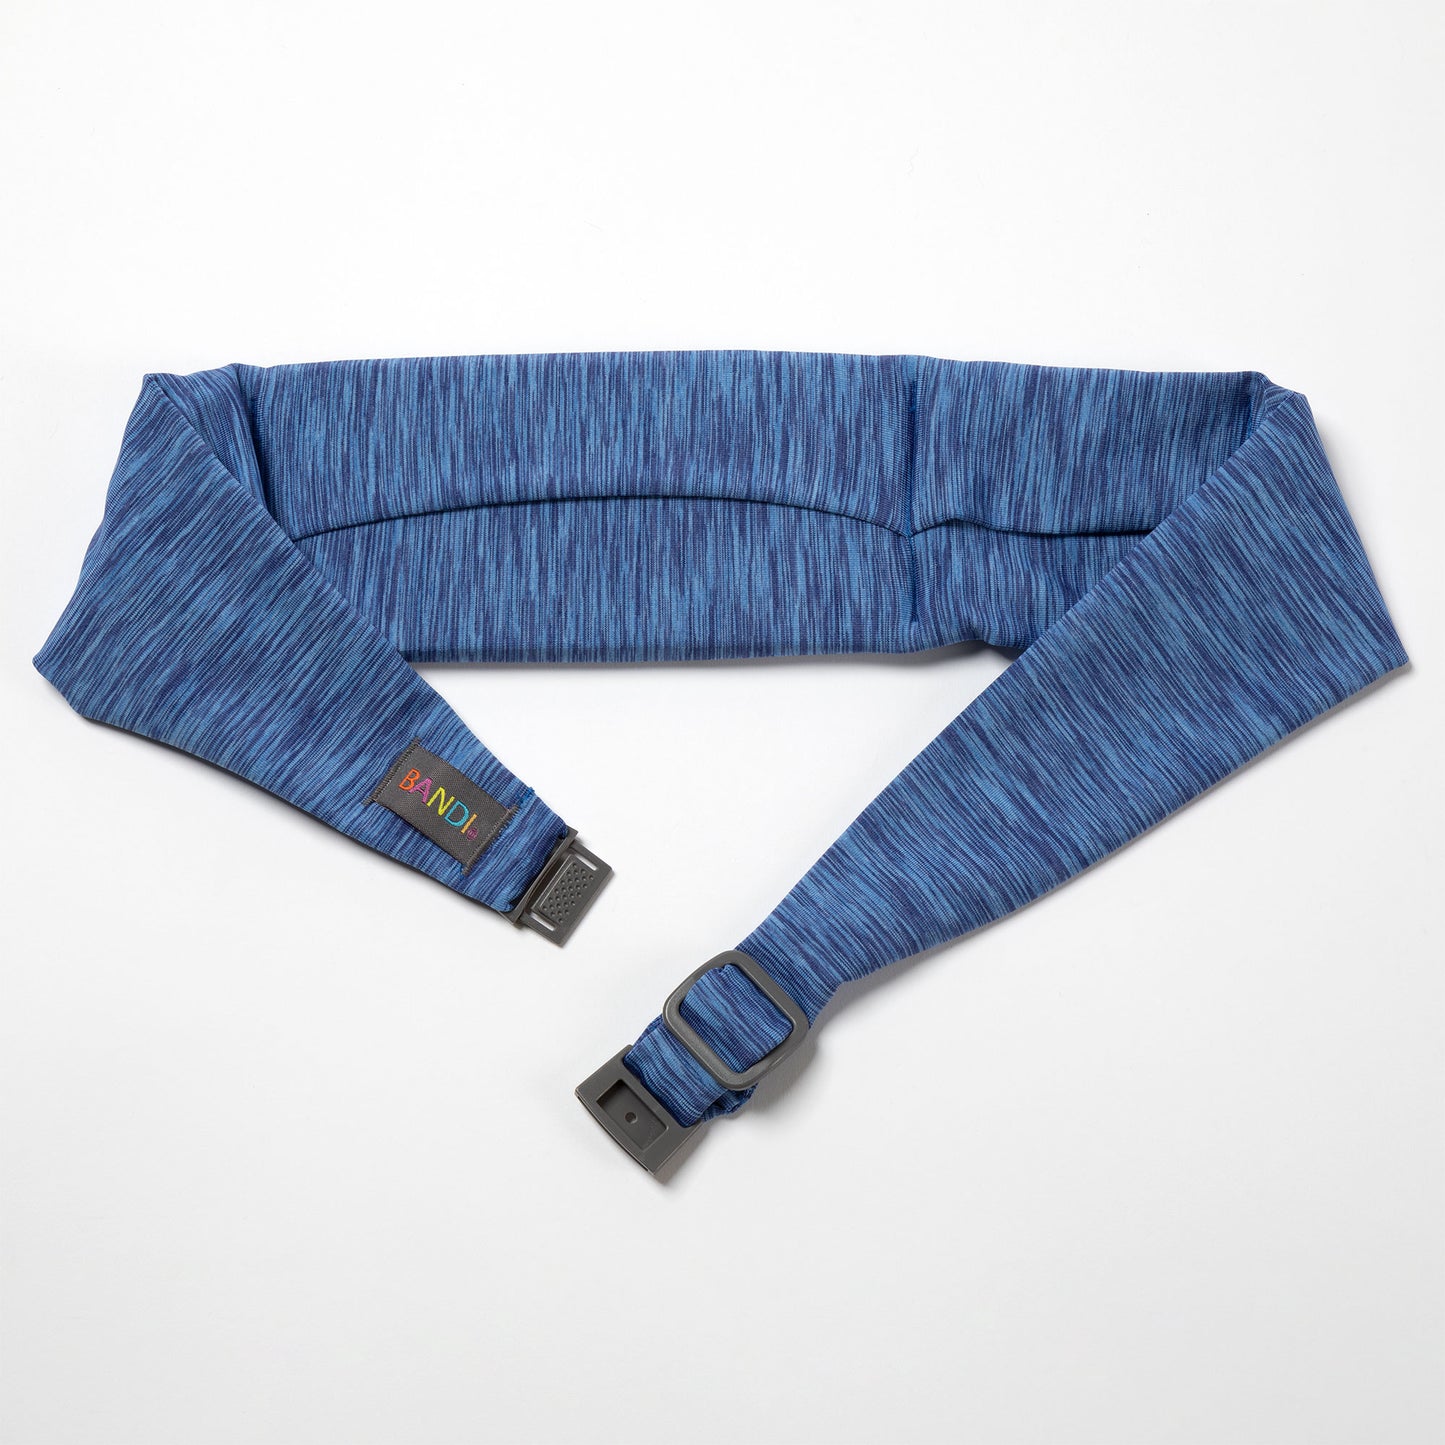 Bandi&reg; Sleek Pocketed Belt